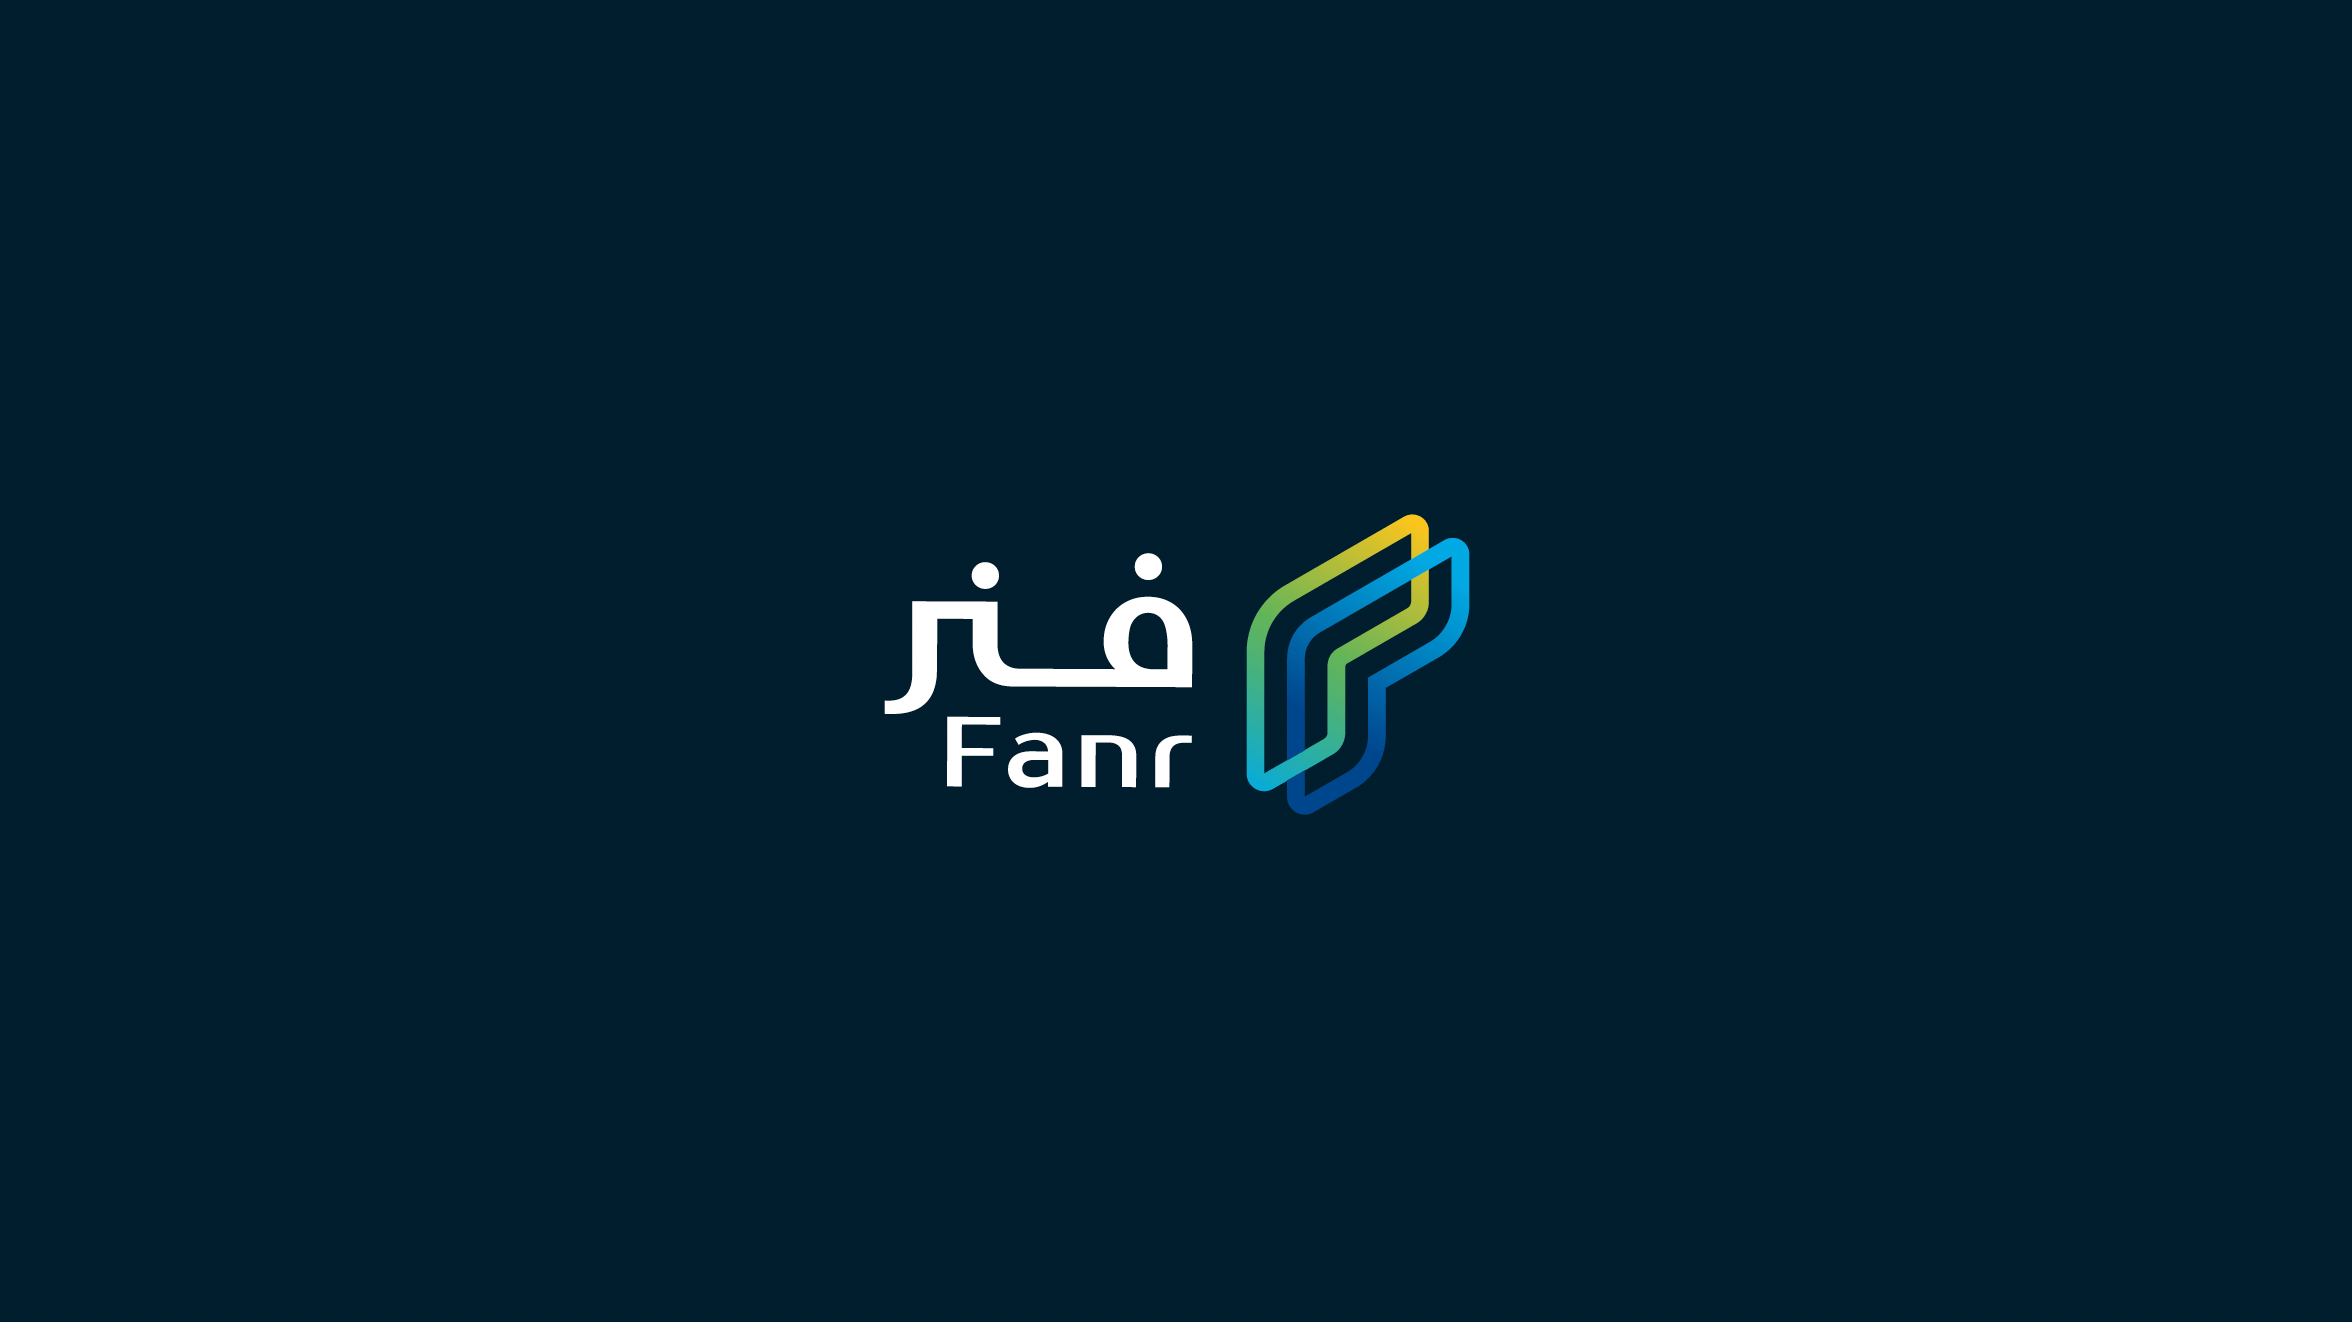 fanar - Lhamim Branding project logo .png